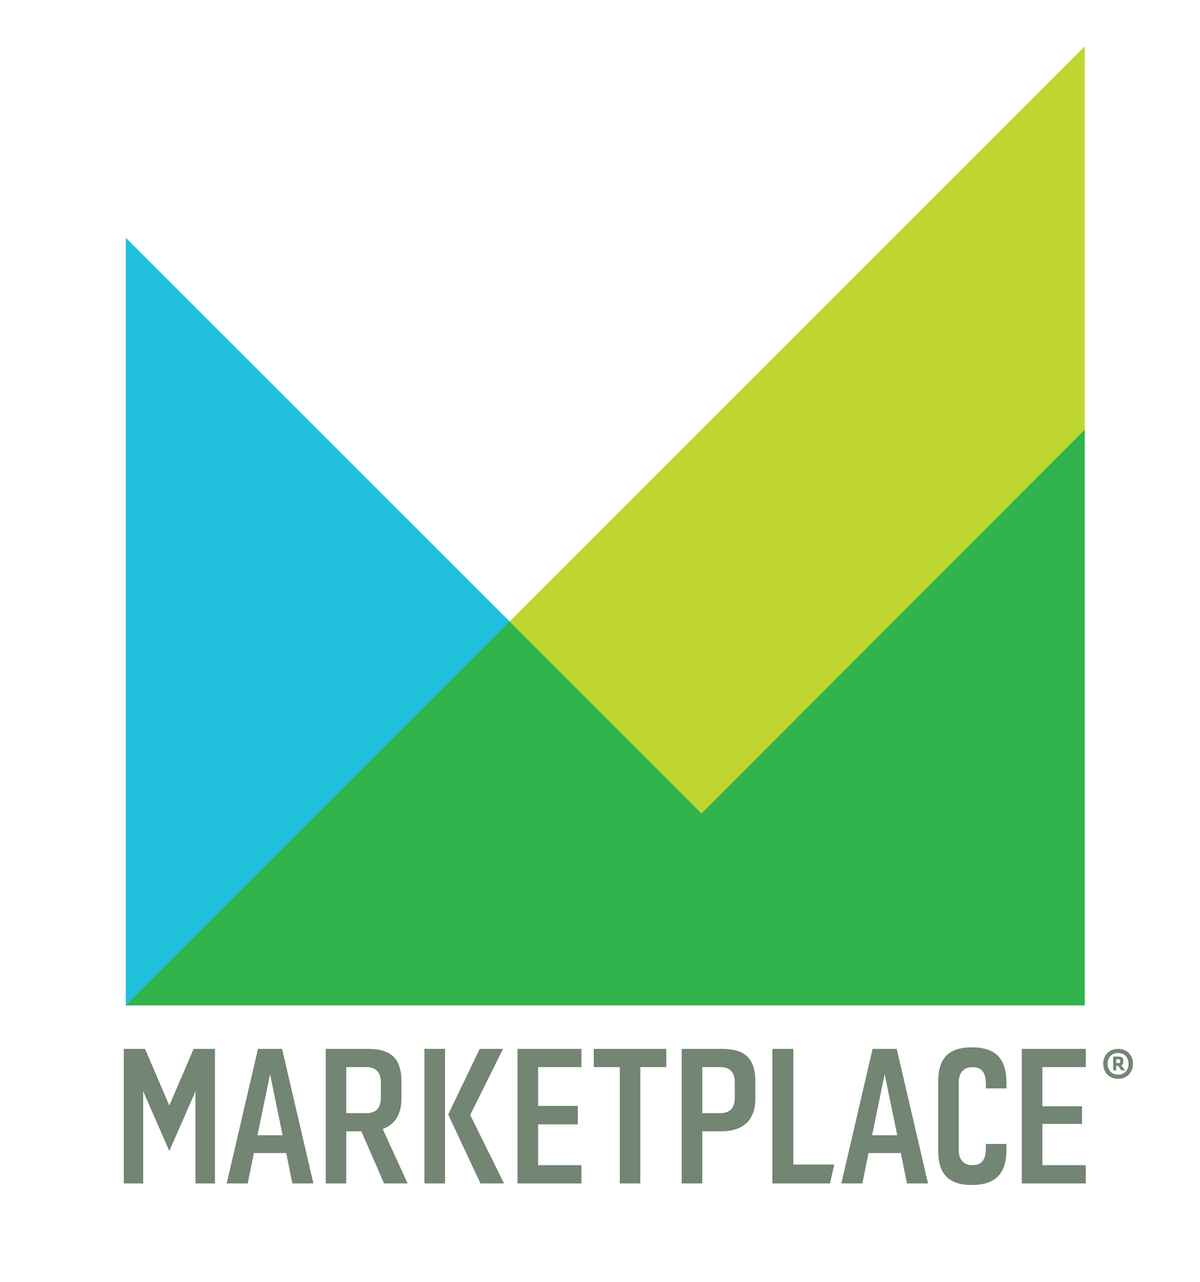 Marketplace (radio program) - Study in China 2022 - Wiki English